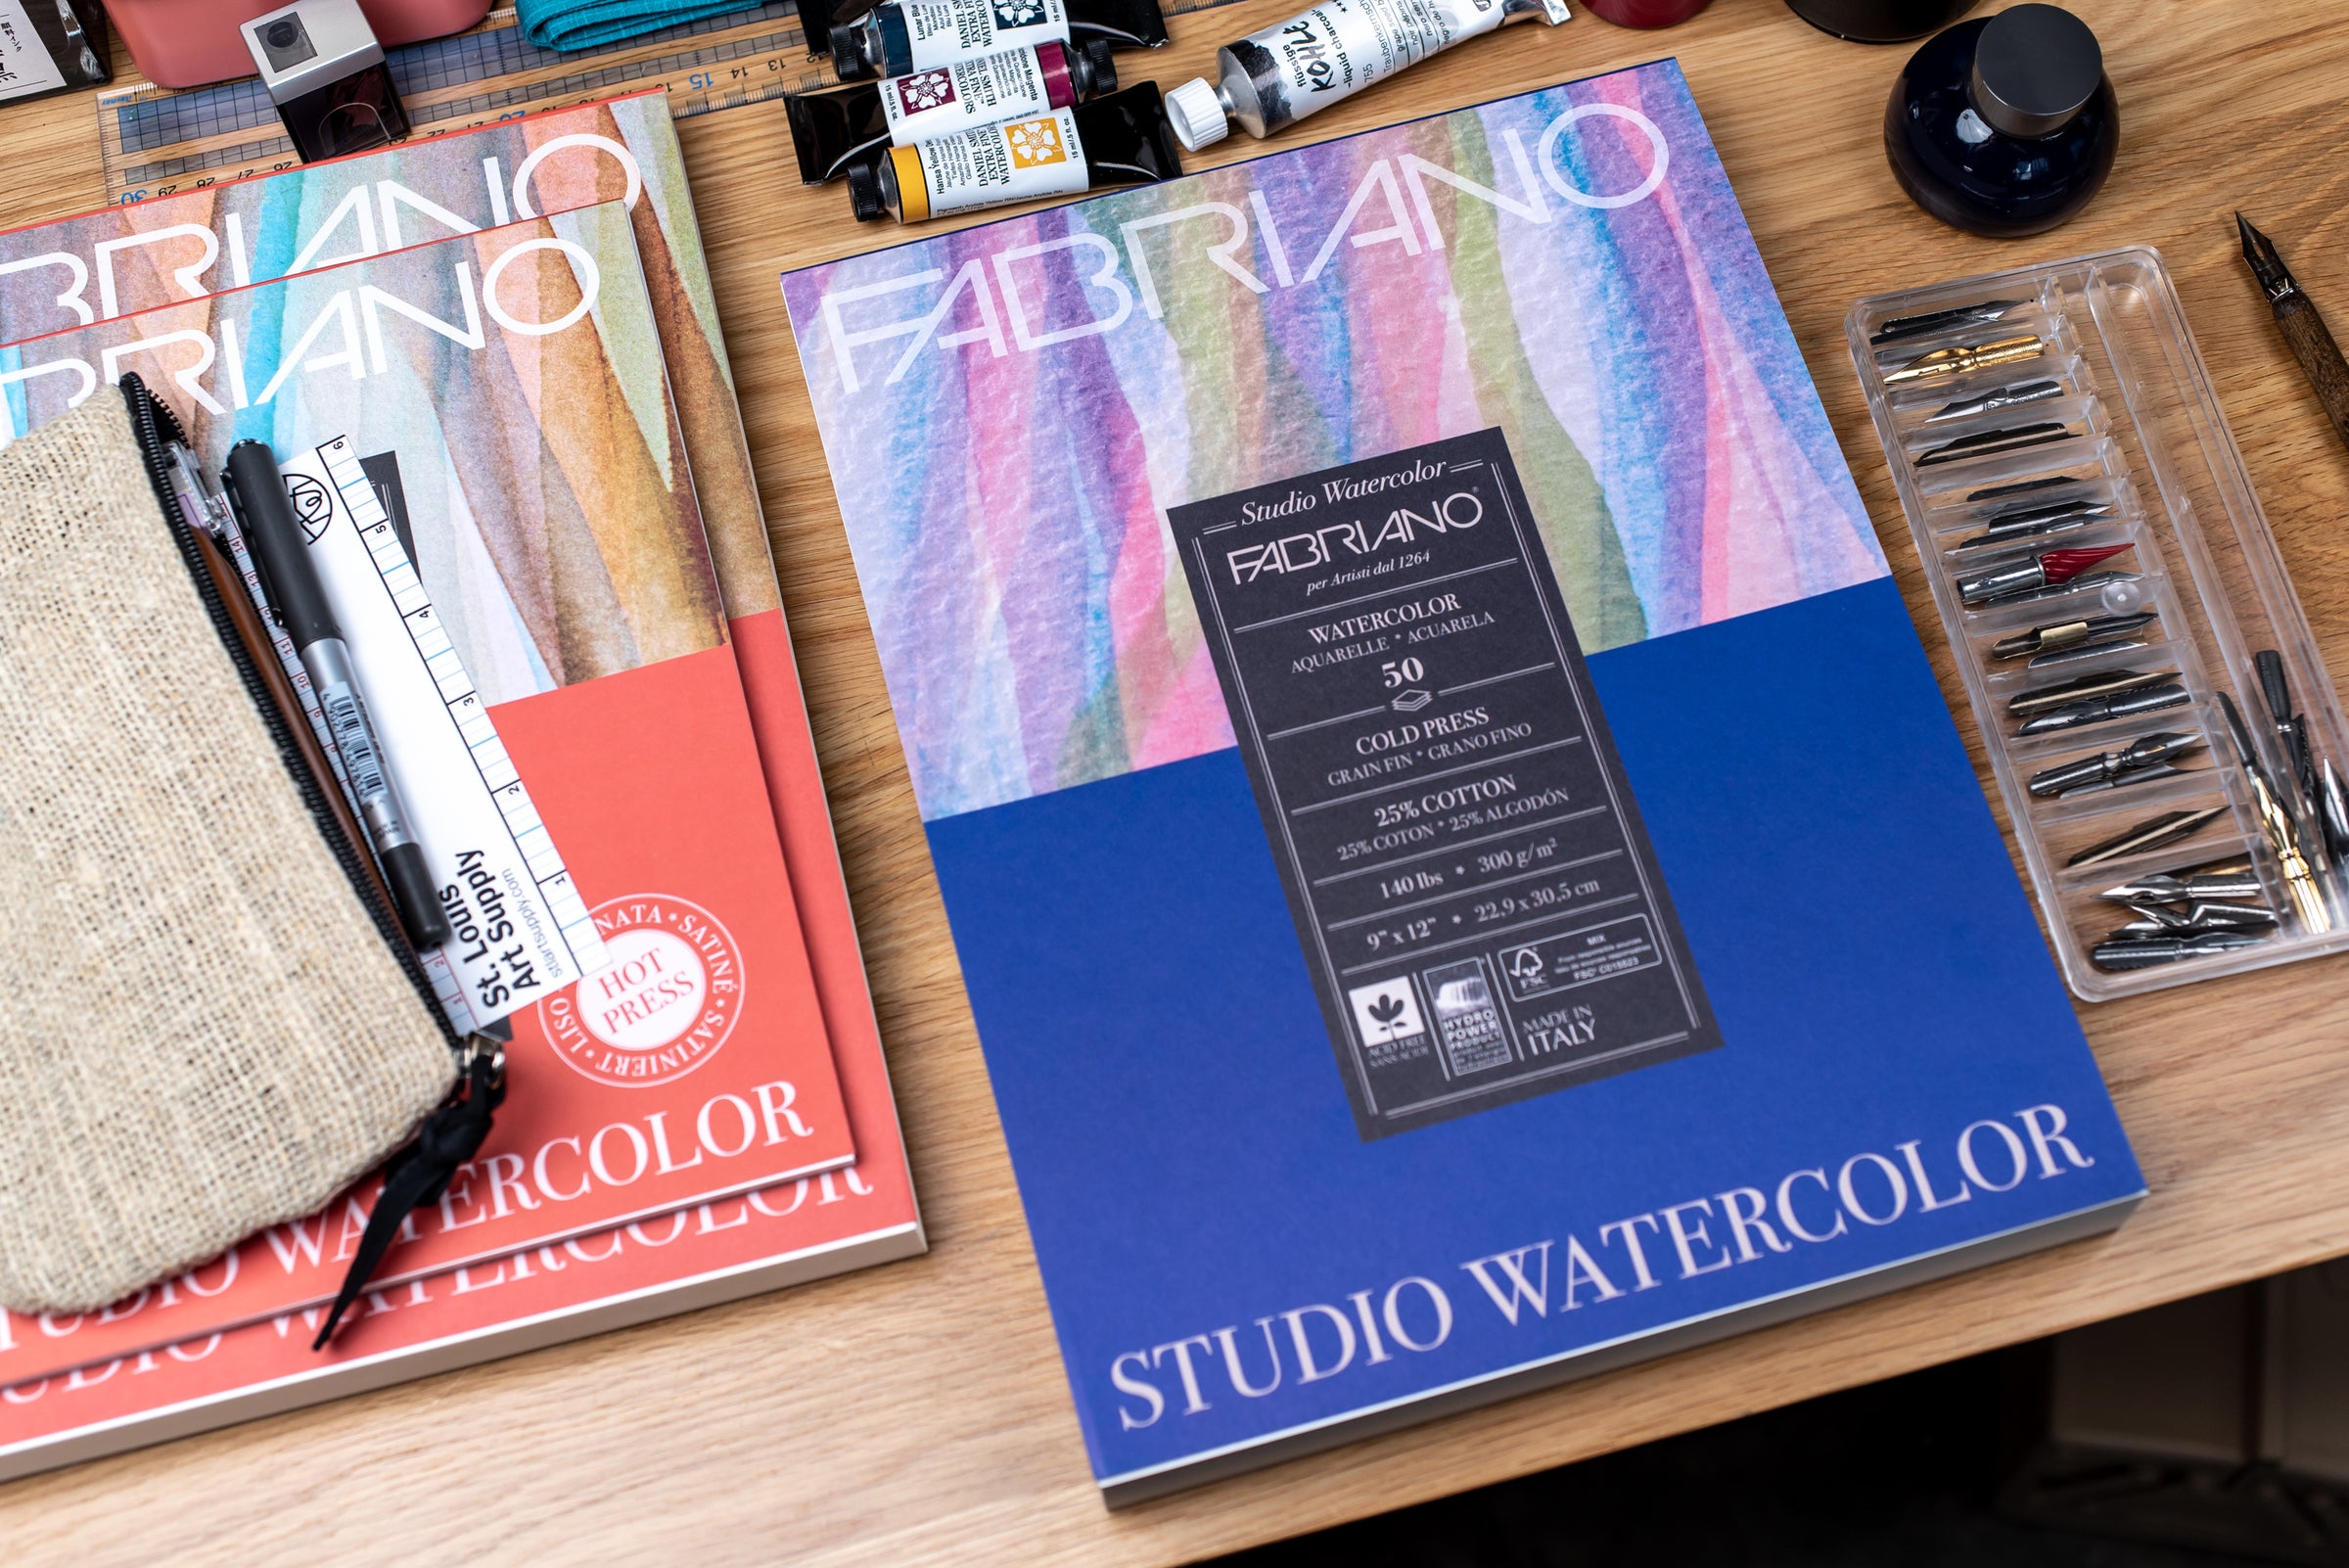 Fabriano Studio Watercolor Pad, Hot-Press, 11 inch x 14 inch, 140 lb., 12 Sheets